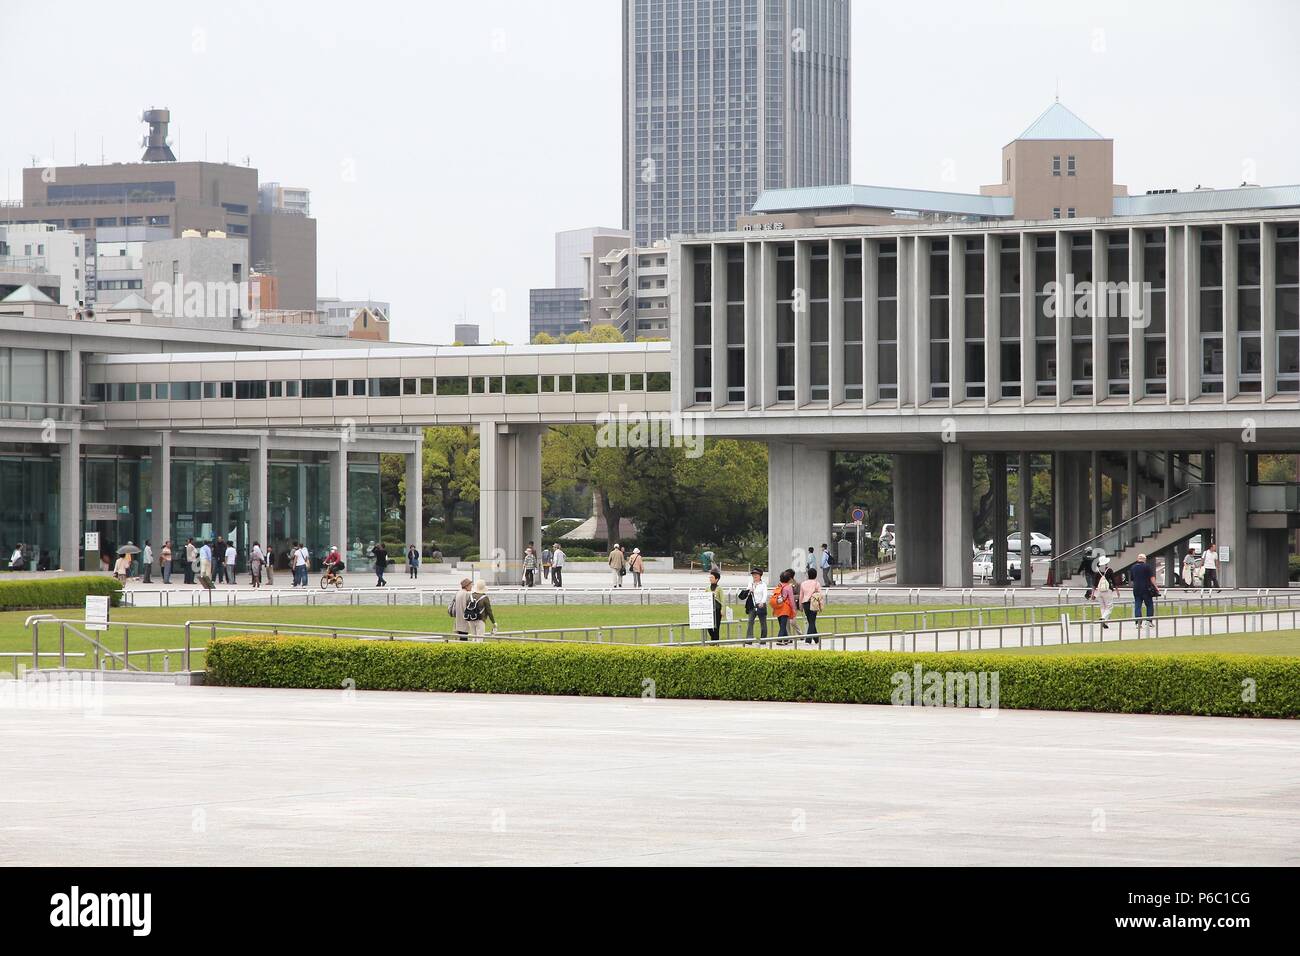 HIROSHIMA, JAPAN - APRIL 21, 2012: People visit Peace Memorial Museum in Hiroshima, Japan. It educates people about the infamous atomic bombing and wa Stock Photo